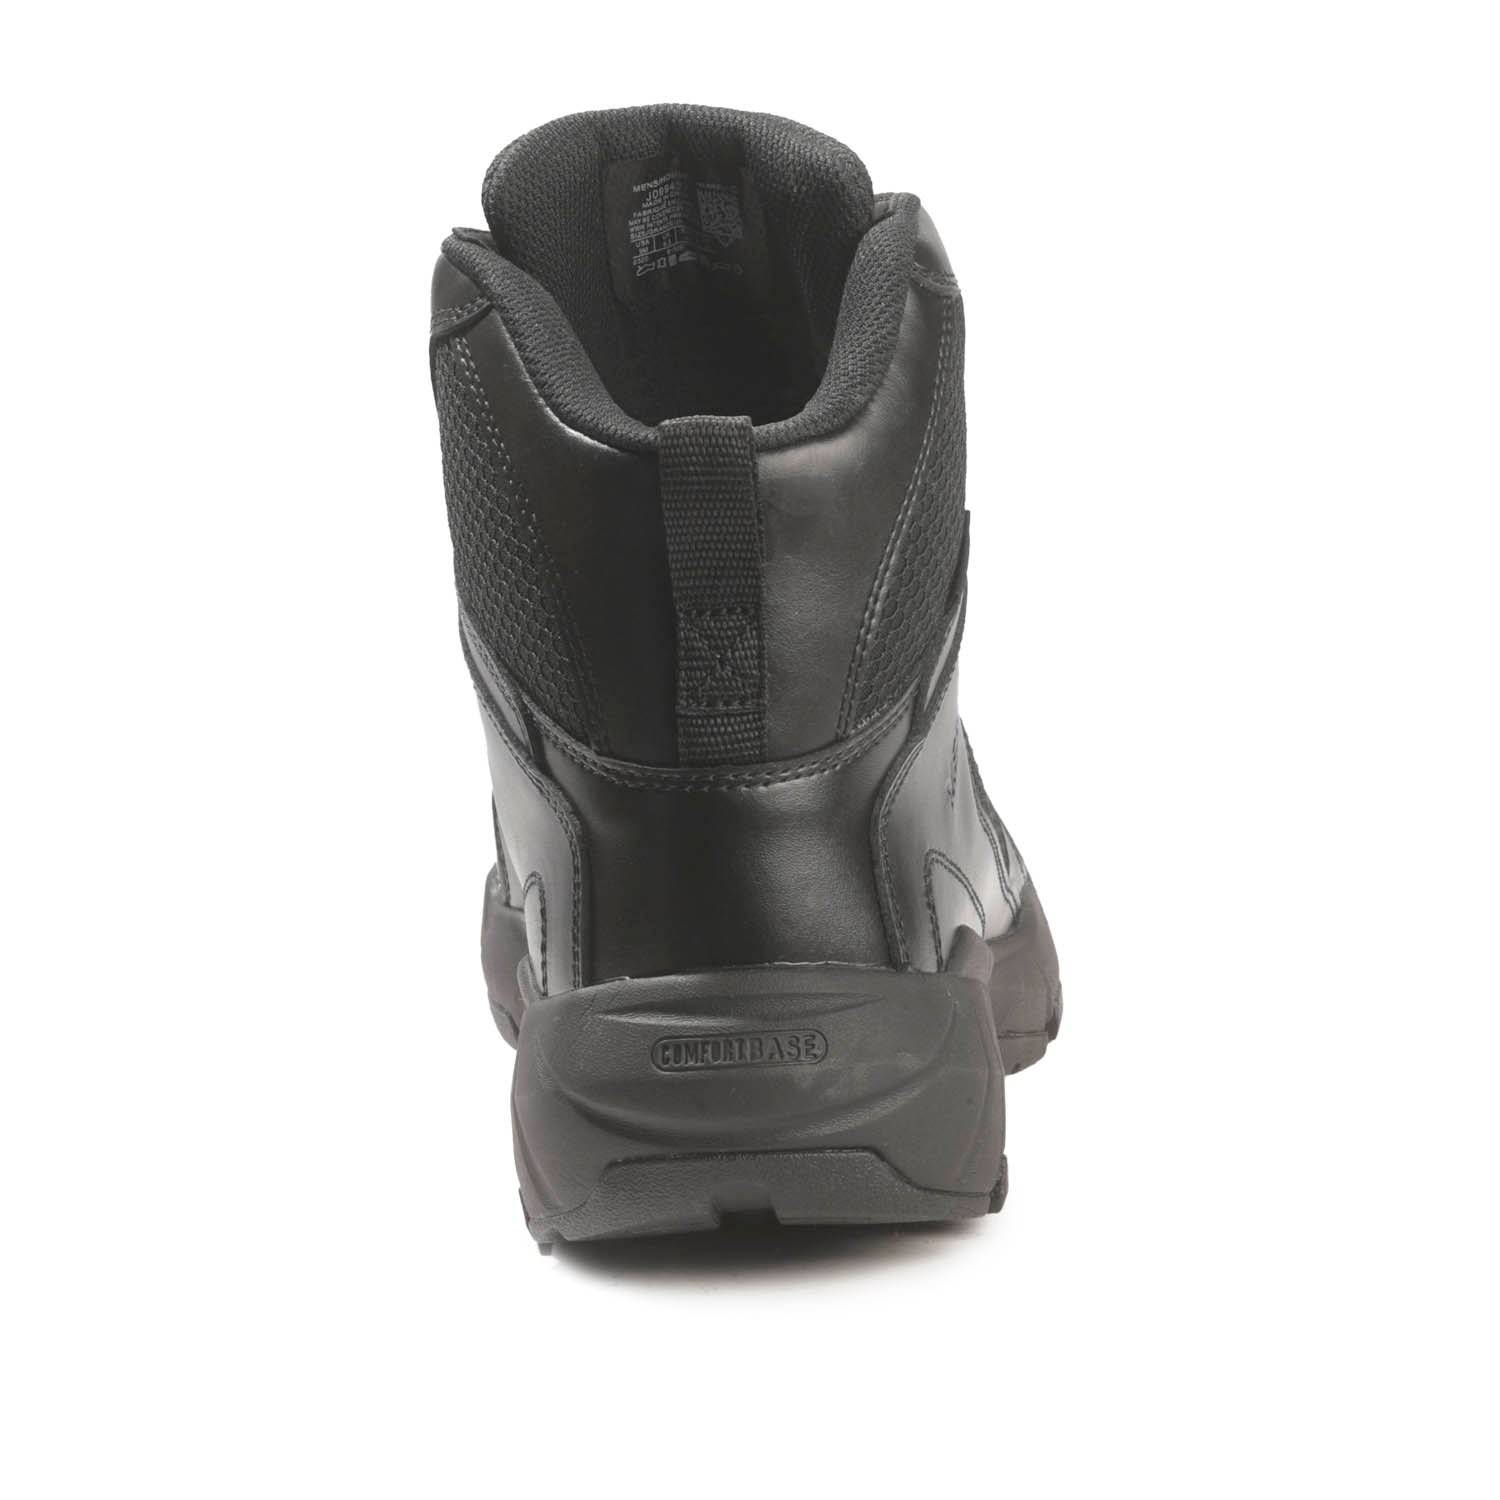 Merrell Tactical Fullbench Mid Waterproof Boots